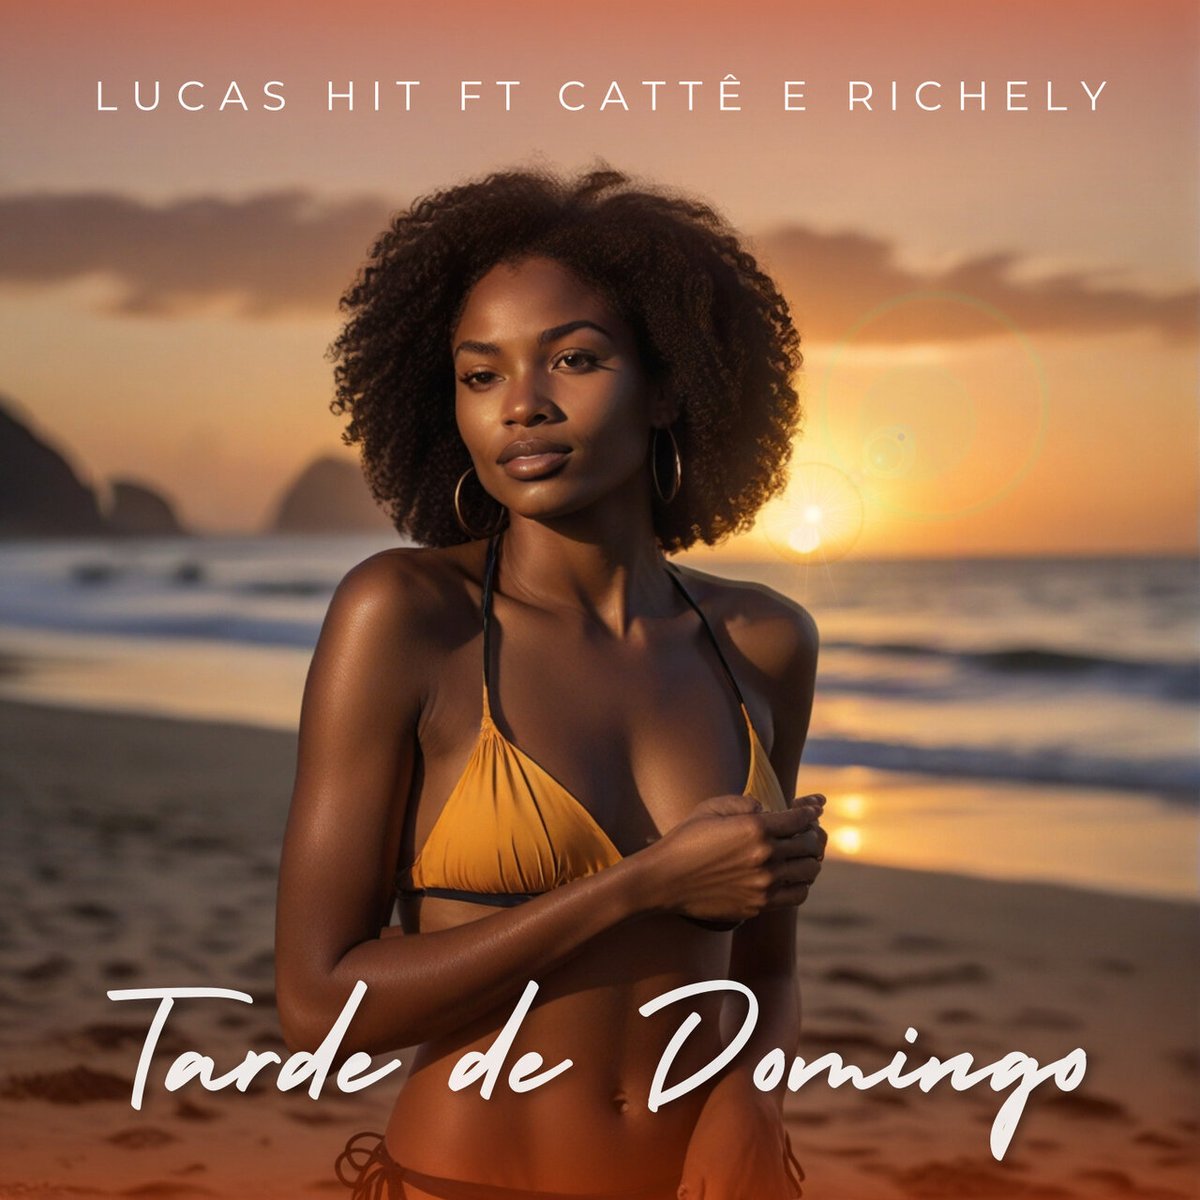 Lucas Hit lança a música “Tarde de Domingo” zonasuburbana.com.br/lucas-hit-lanc… via @ZonaSuburbana